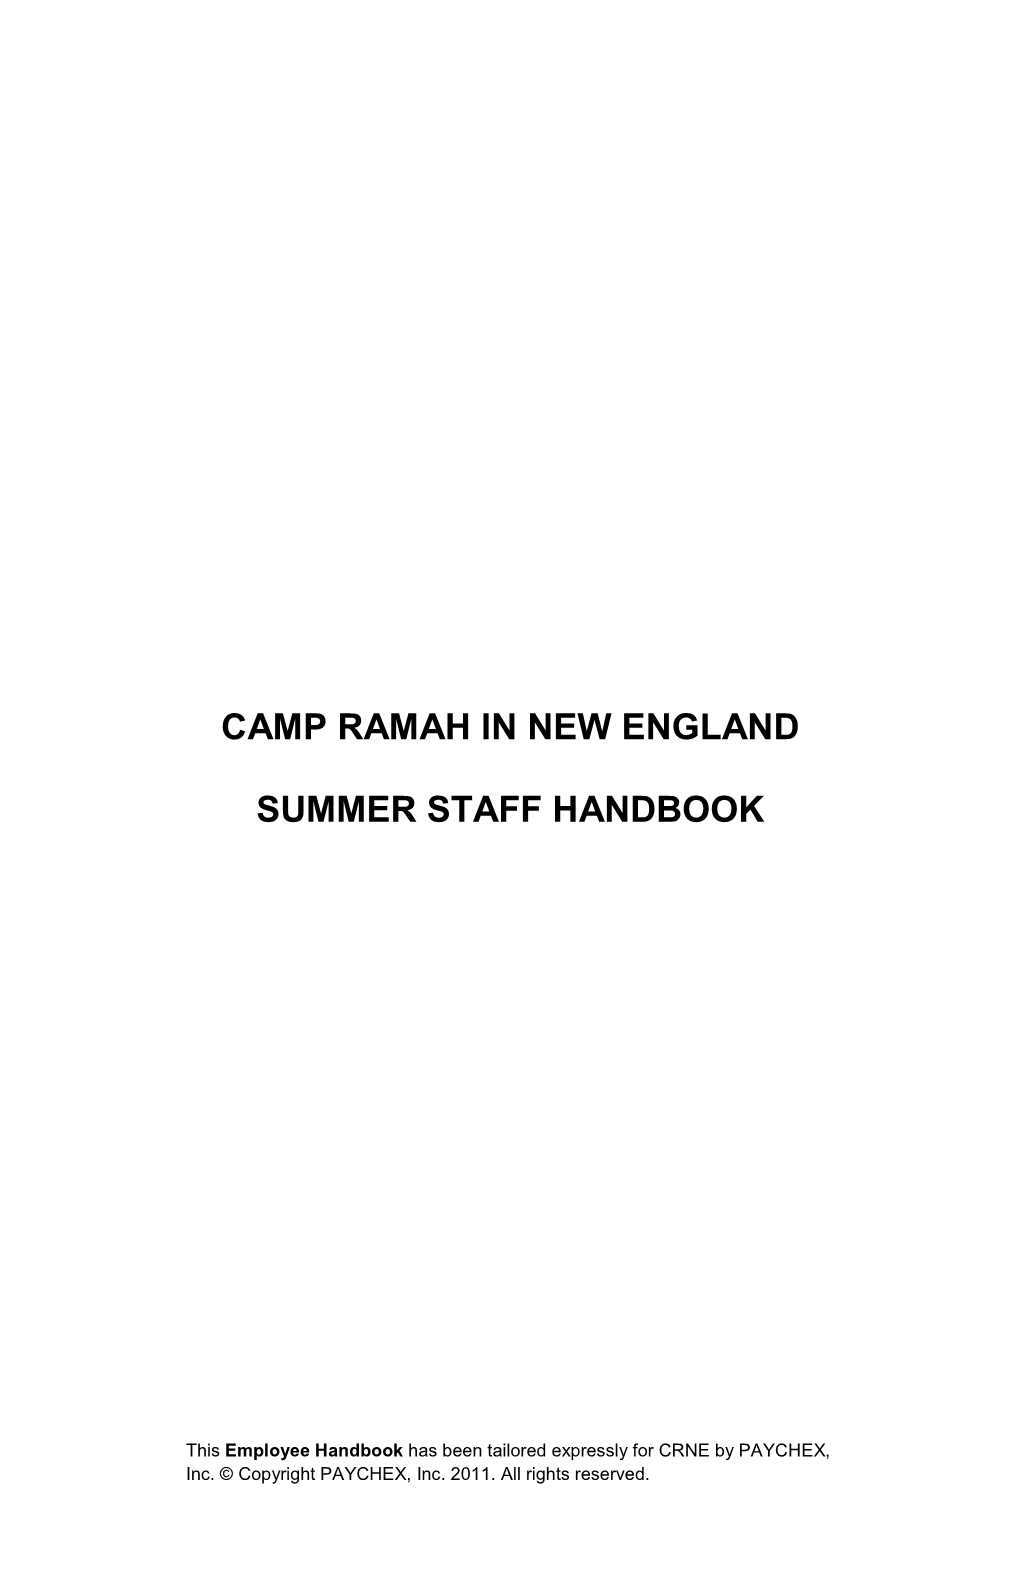 Camp Ramah in New England Summer Staff Handbook